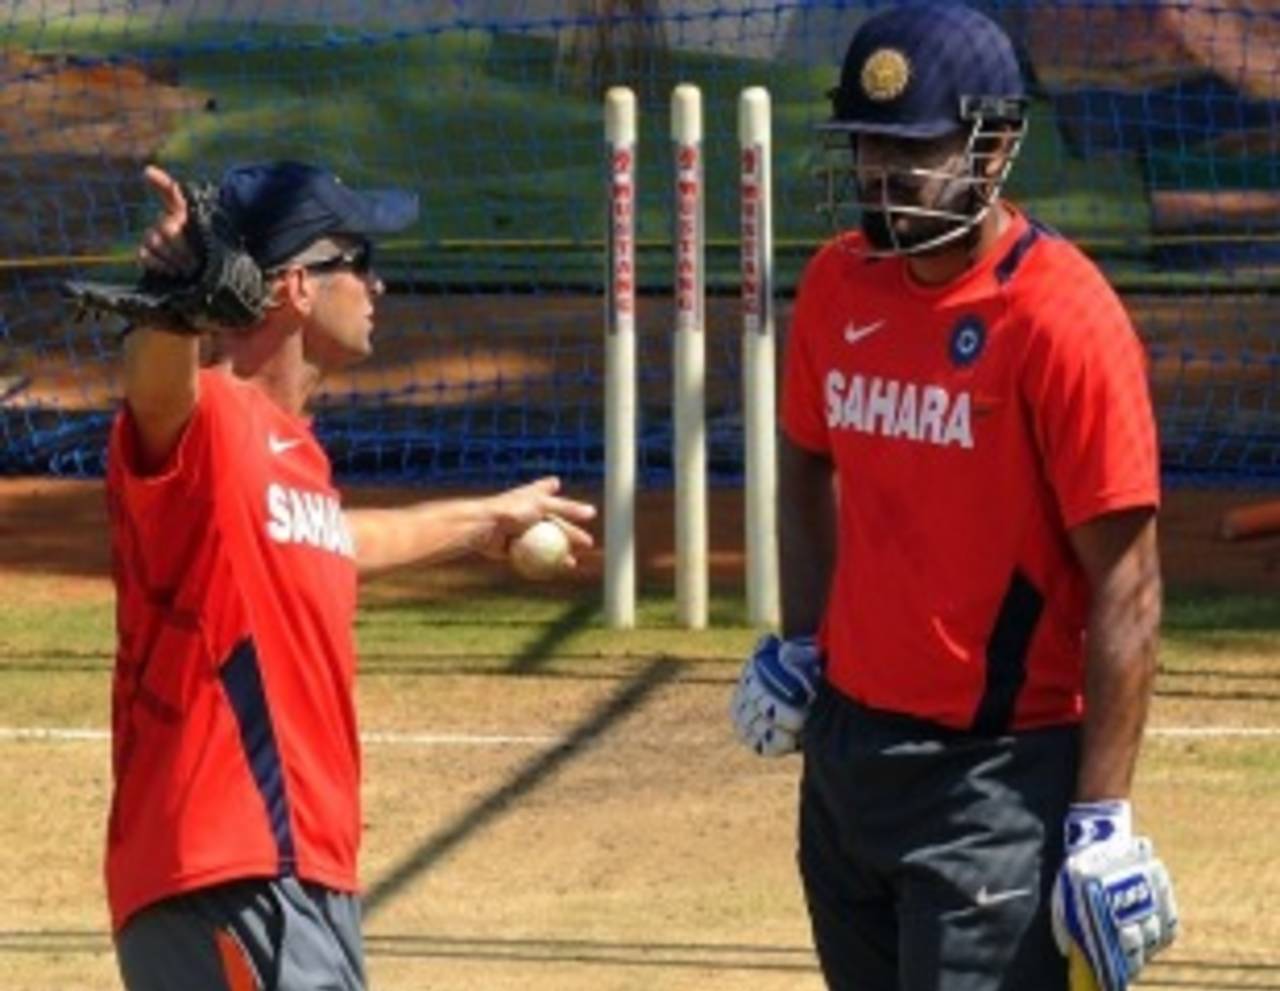 Paddy Upton tells Yusuf Pathan to swing away, World Cup, Bangalore, March 2, 2011